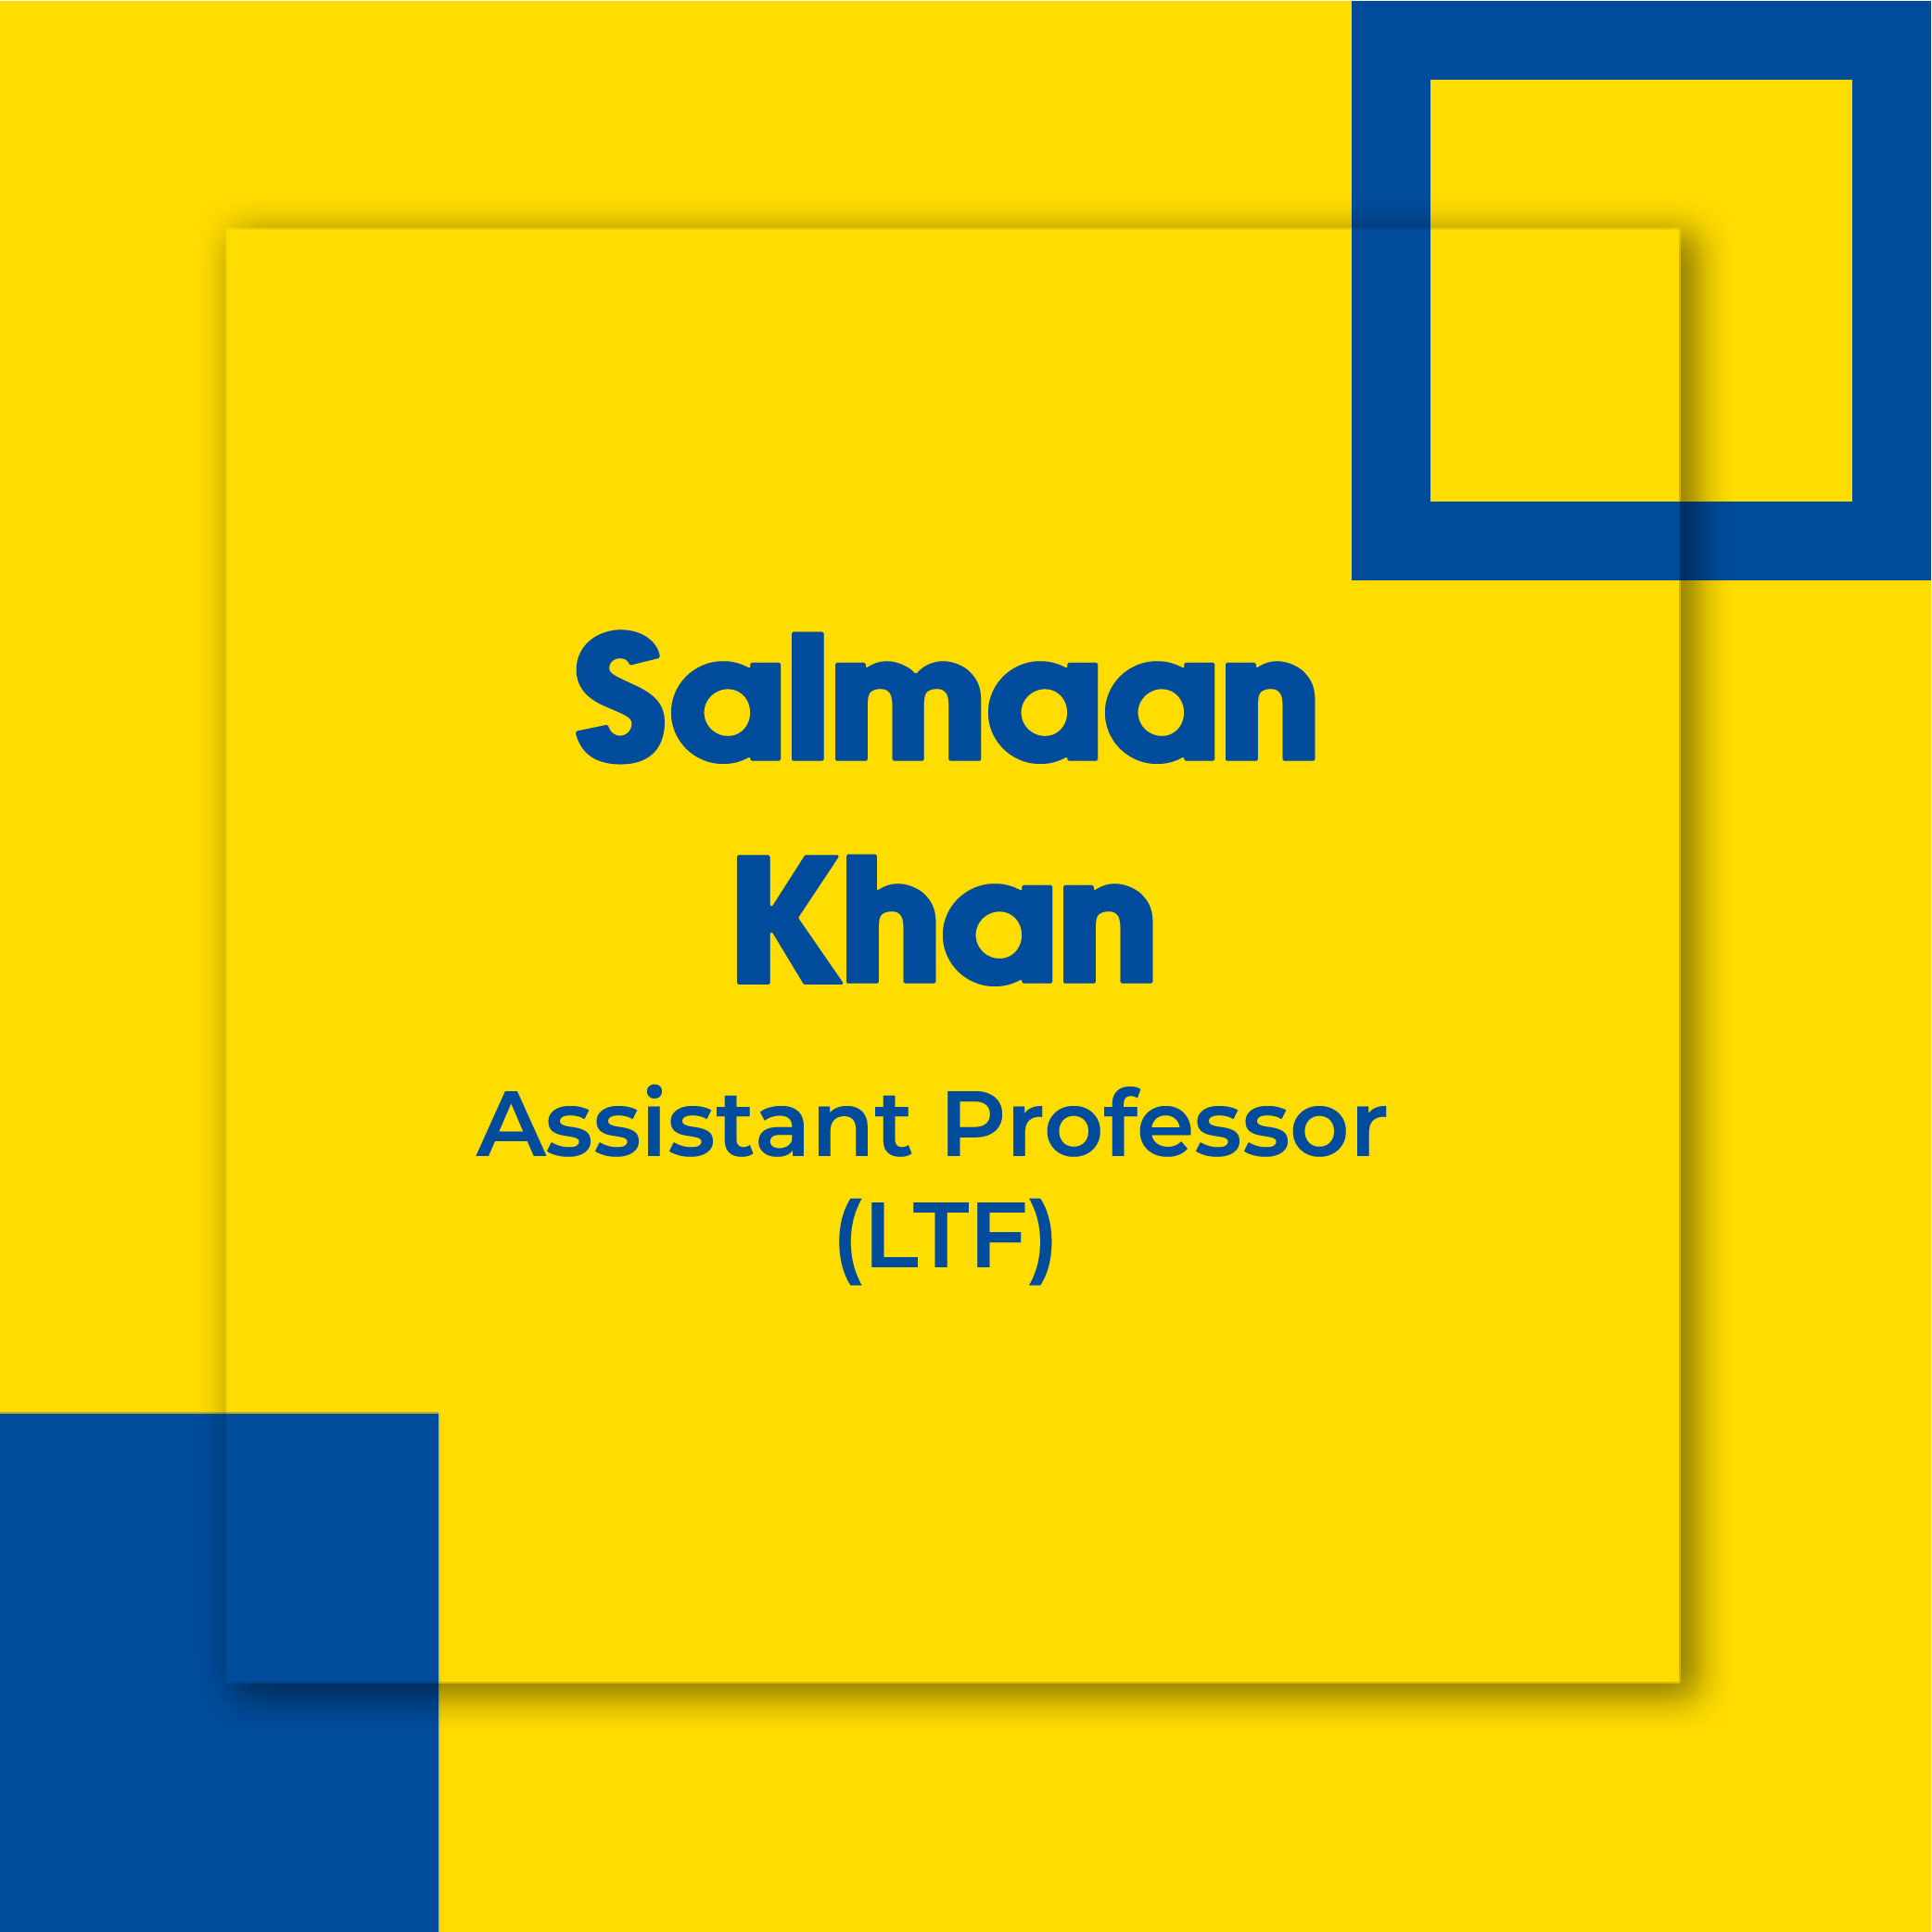 Salmaan Khan, Assistant Professor